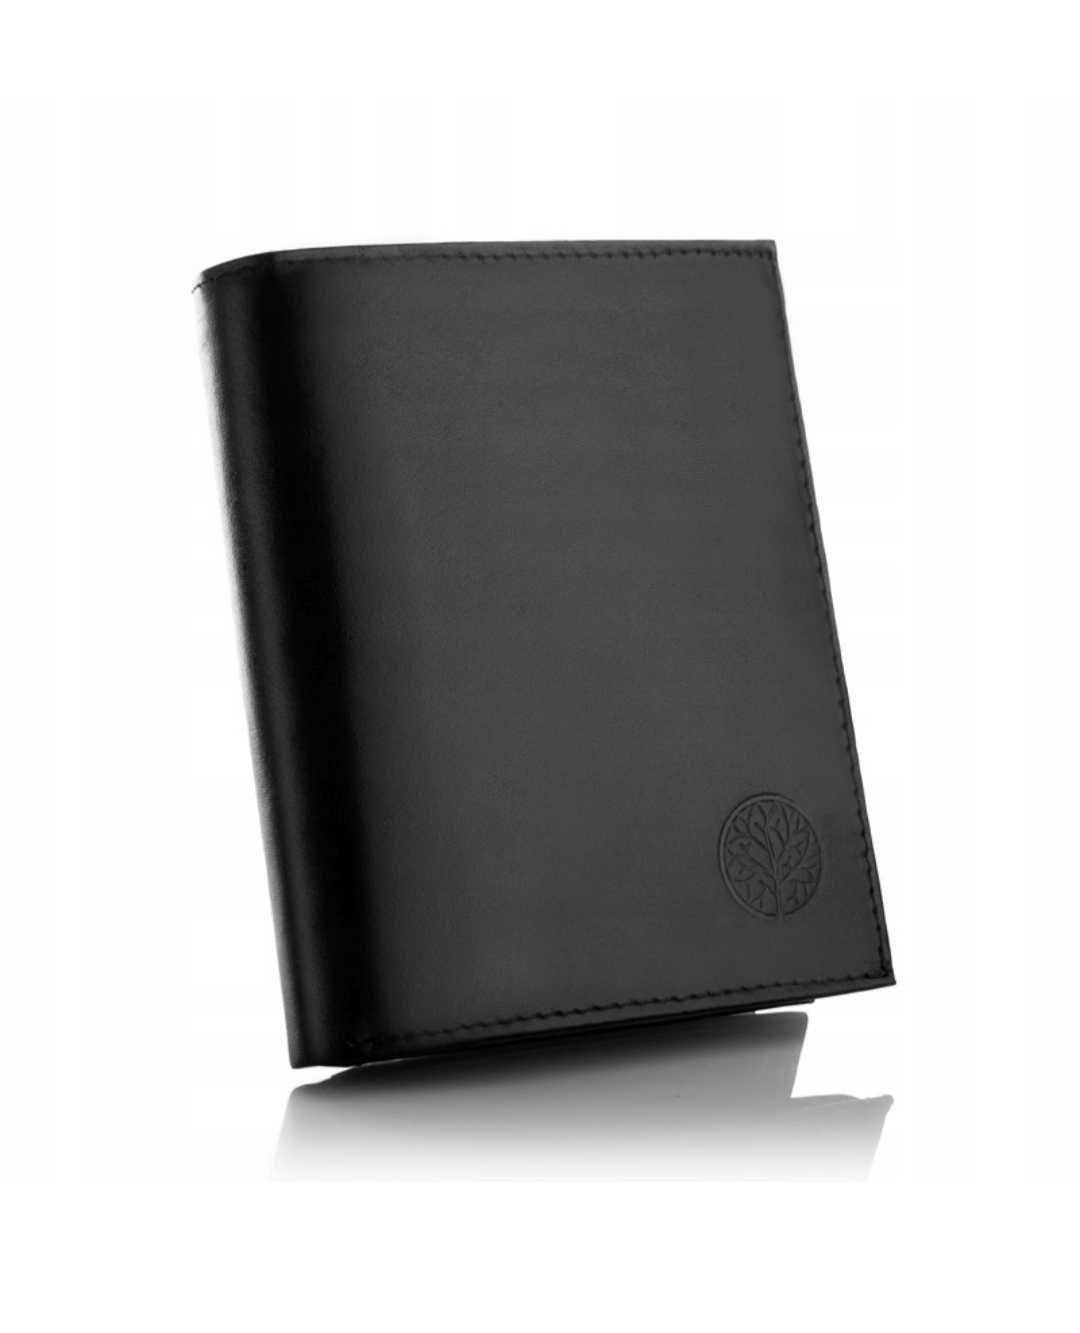 NOWY elegancki skórzany portfel męski czarny skóra naturalna RFID